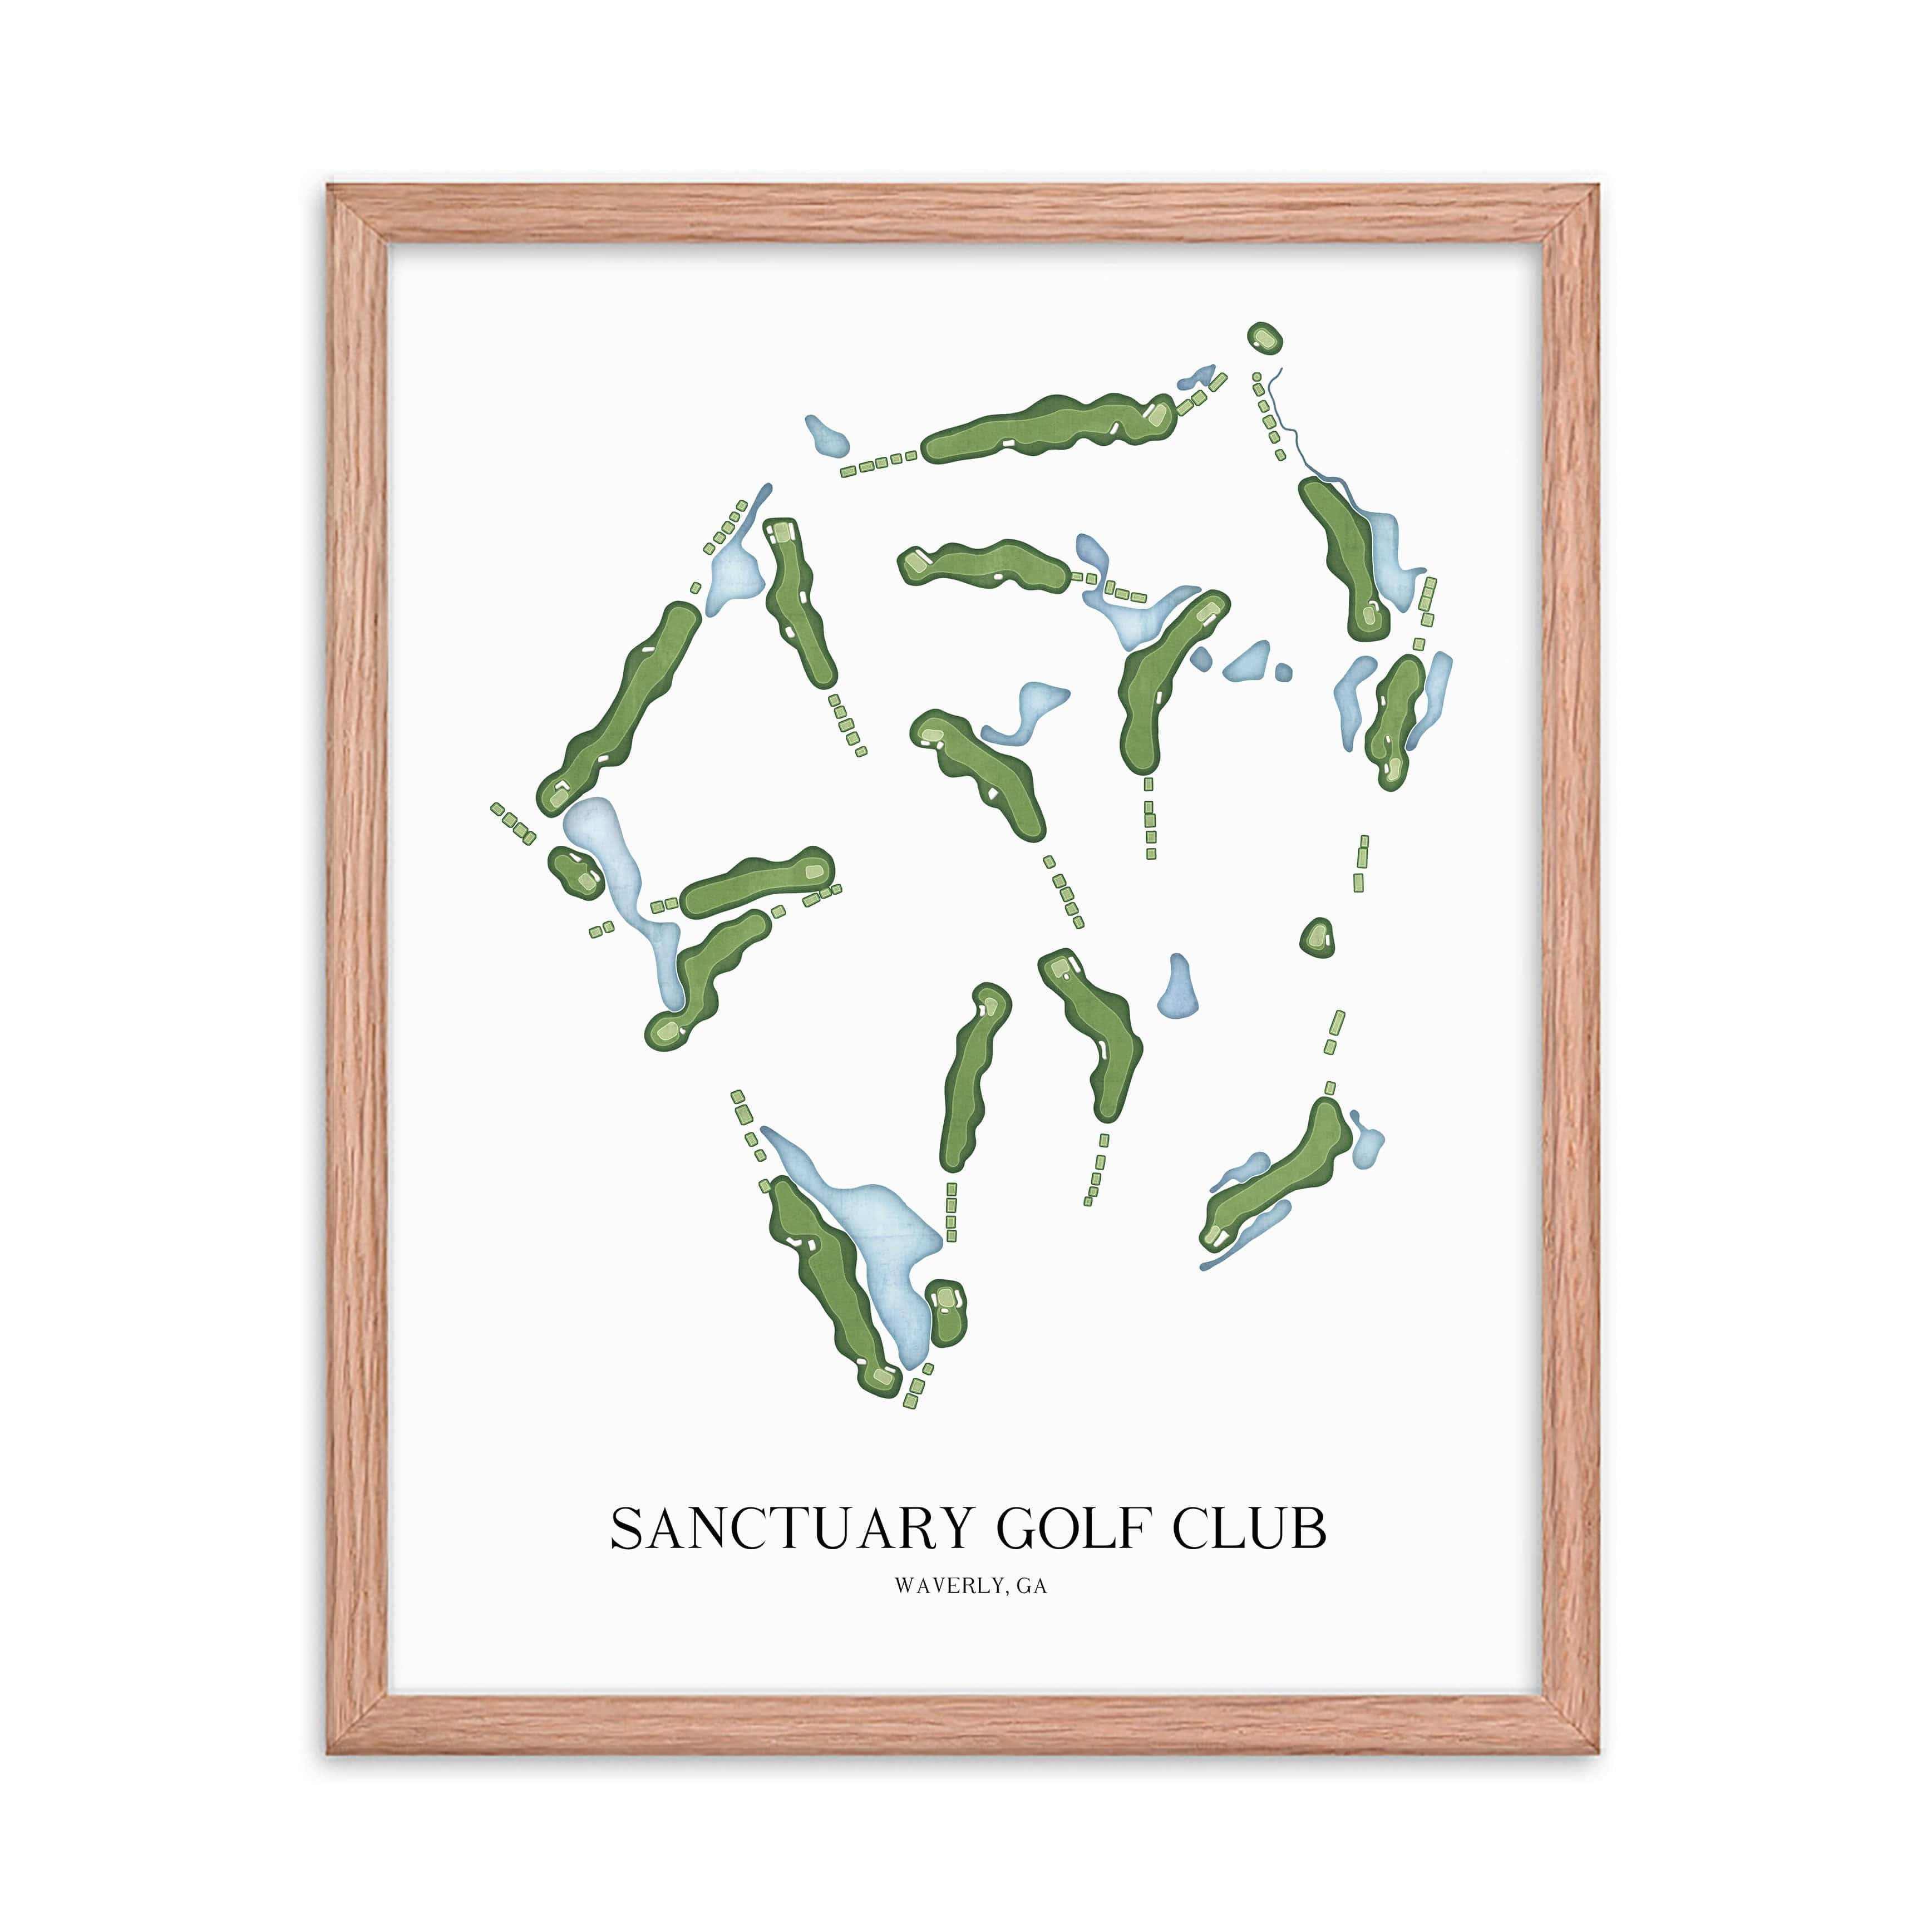 The 19th Hole Golf Shop - Golf Course Prints -  Sanctuary Golf Club Golf Course Map